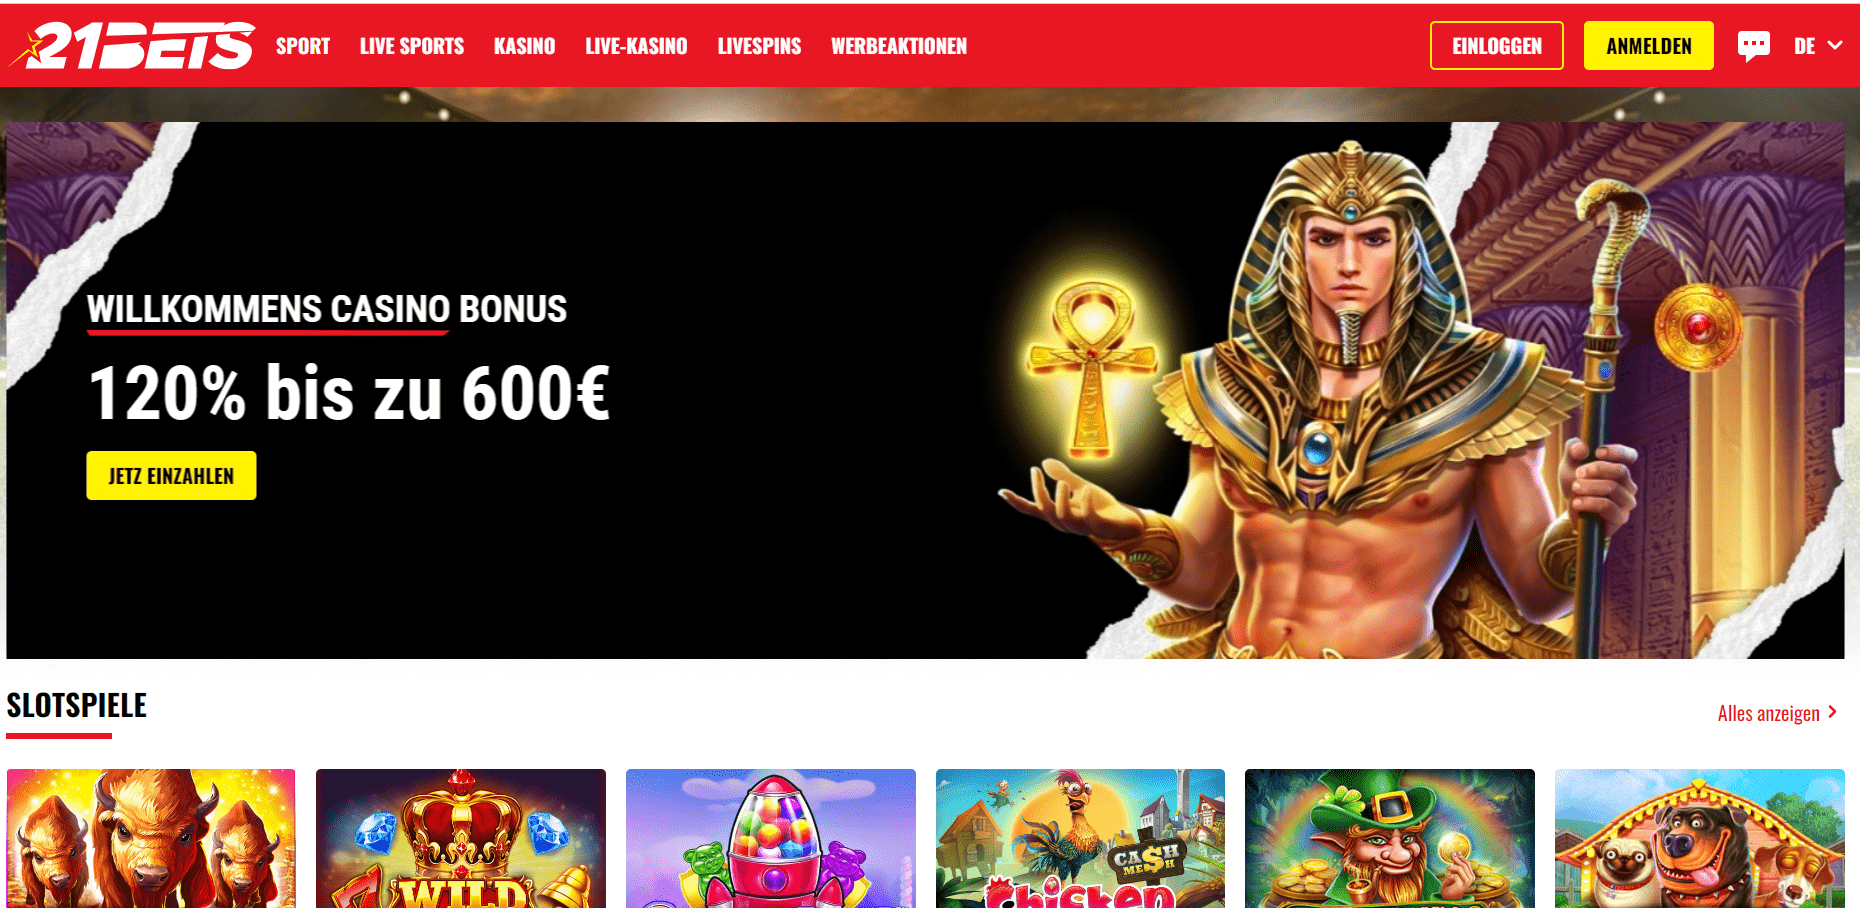 21bets Casino Homepage